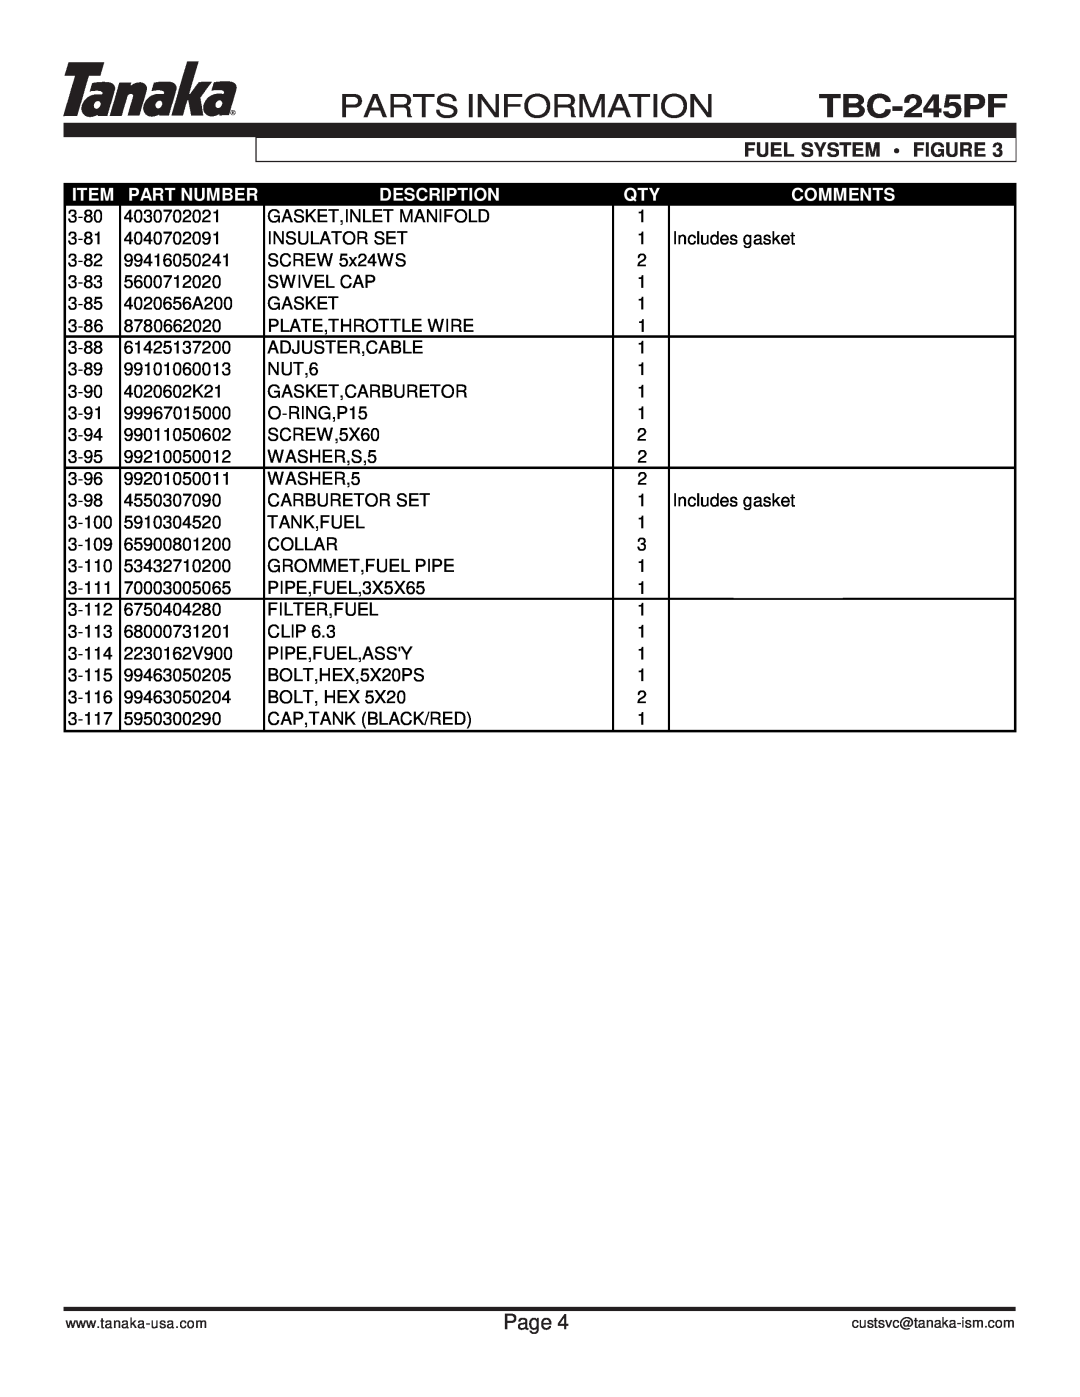 Tanaka TBC-245PF manual Parts Information, Page, Fuel System Figure, Part Number, Description, Comments 